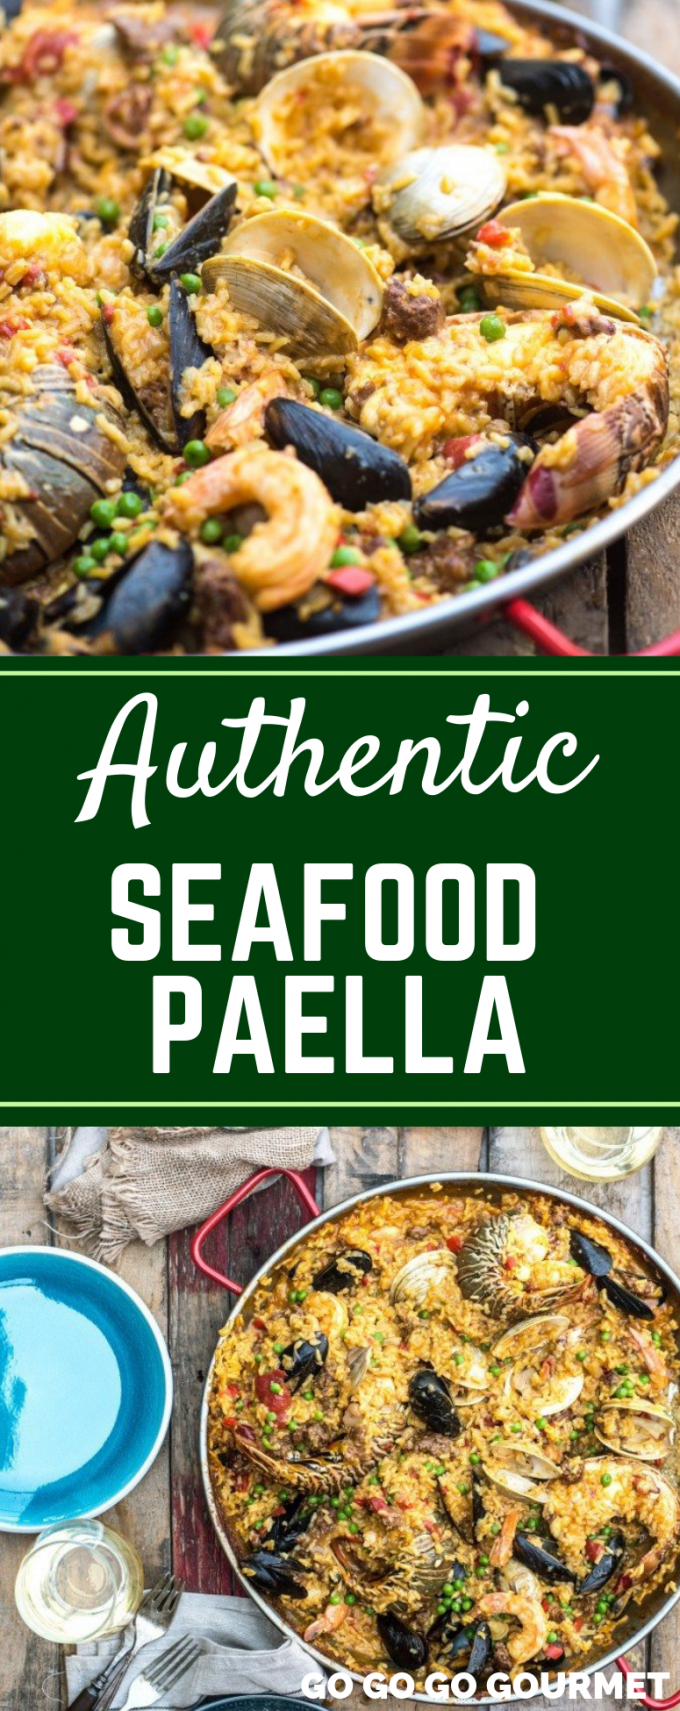 Seafood Paella- Best Seafood Paella Recipe- How to Cook Seafood Paella